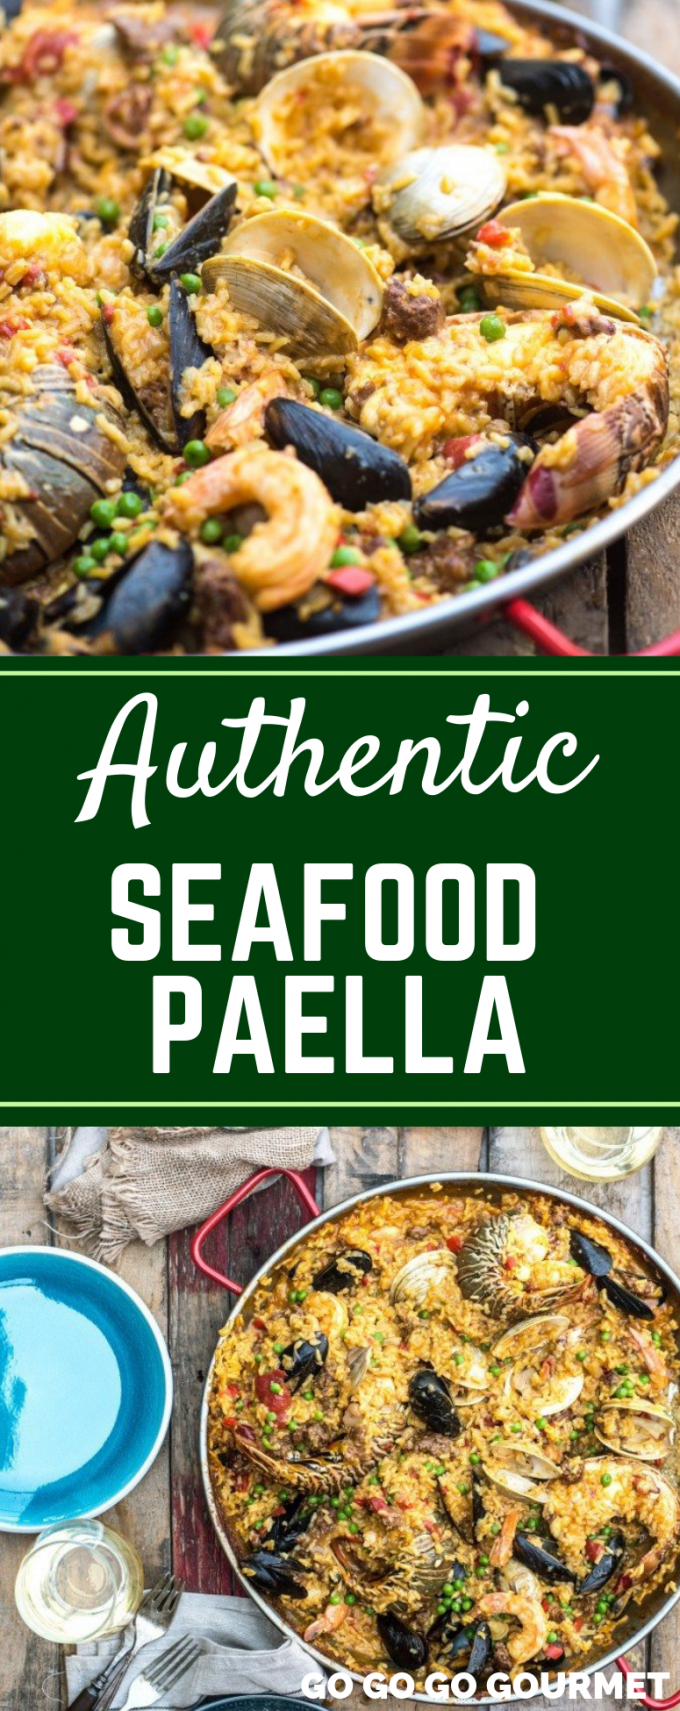 Seafood Paella- Best Seafood Paella Recipe- How to Cook Seafood Paella